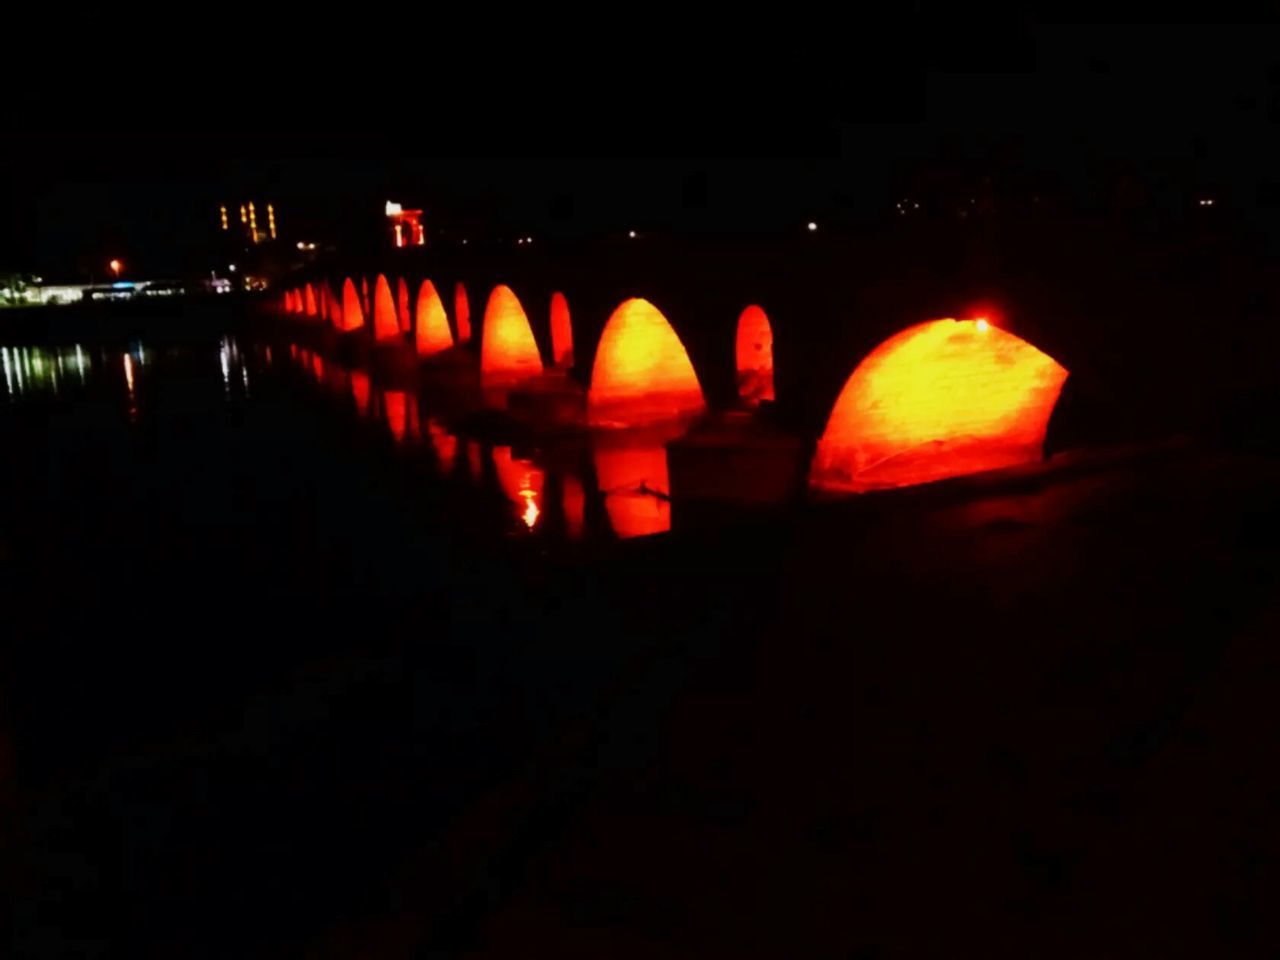 ILLUMINATED ARCH BRIDGE OVER RIVER AT NIGHT DURING SUNSET